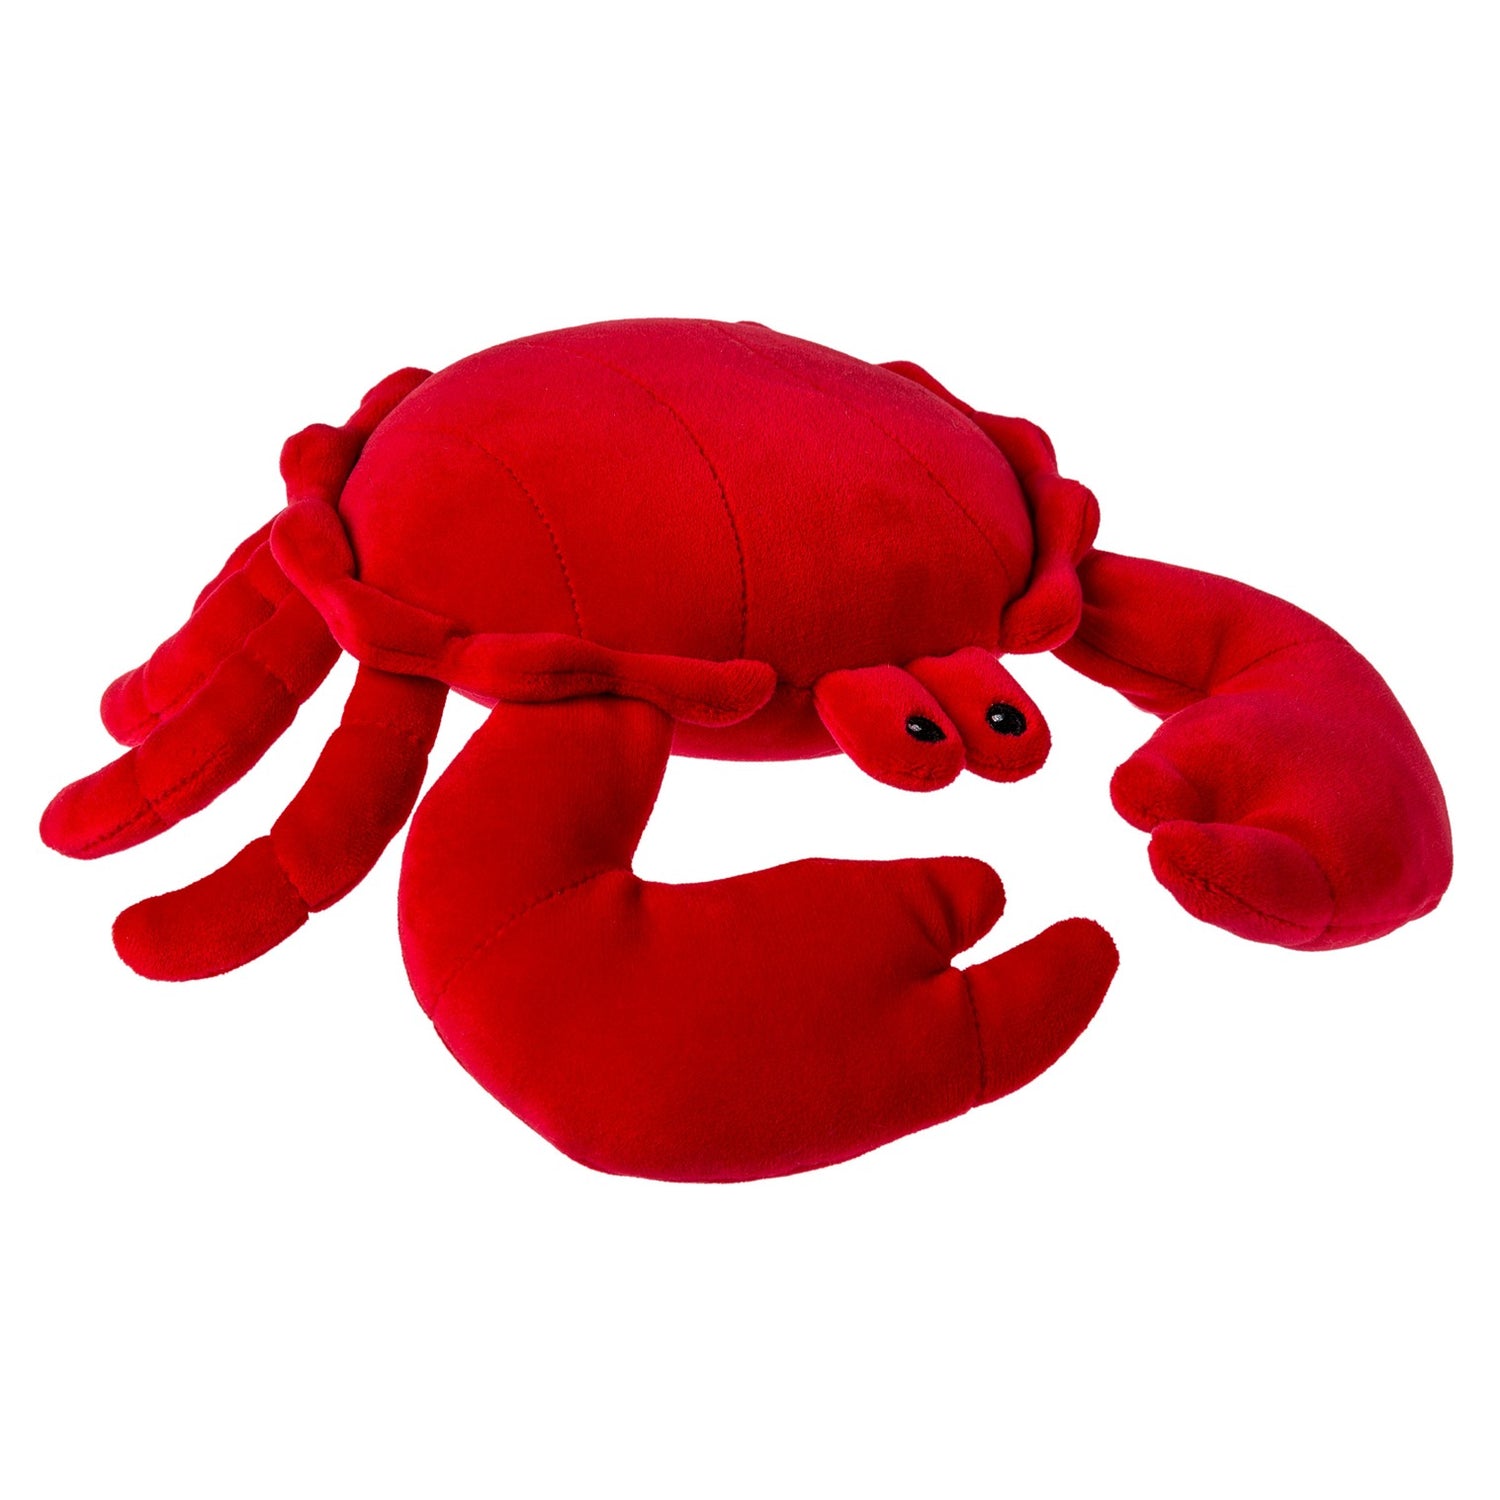 red crab plush